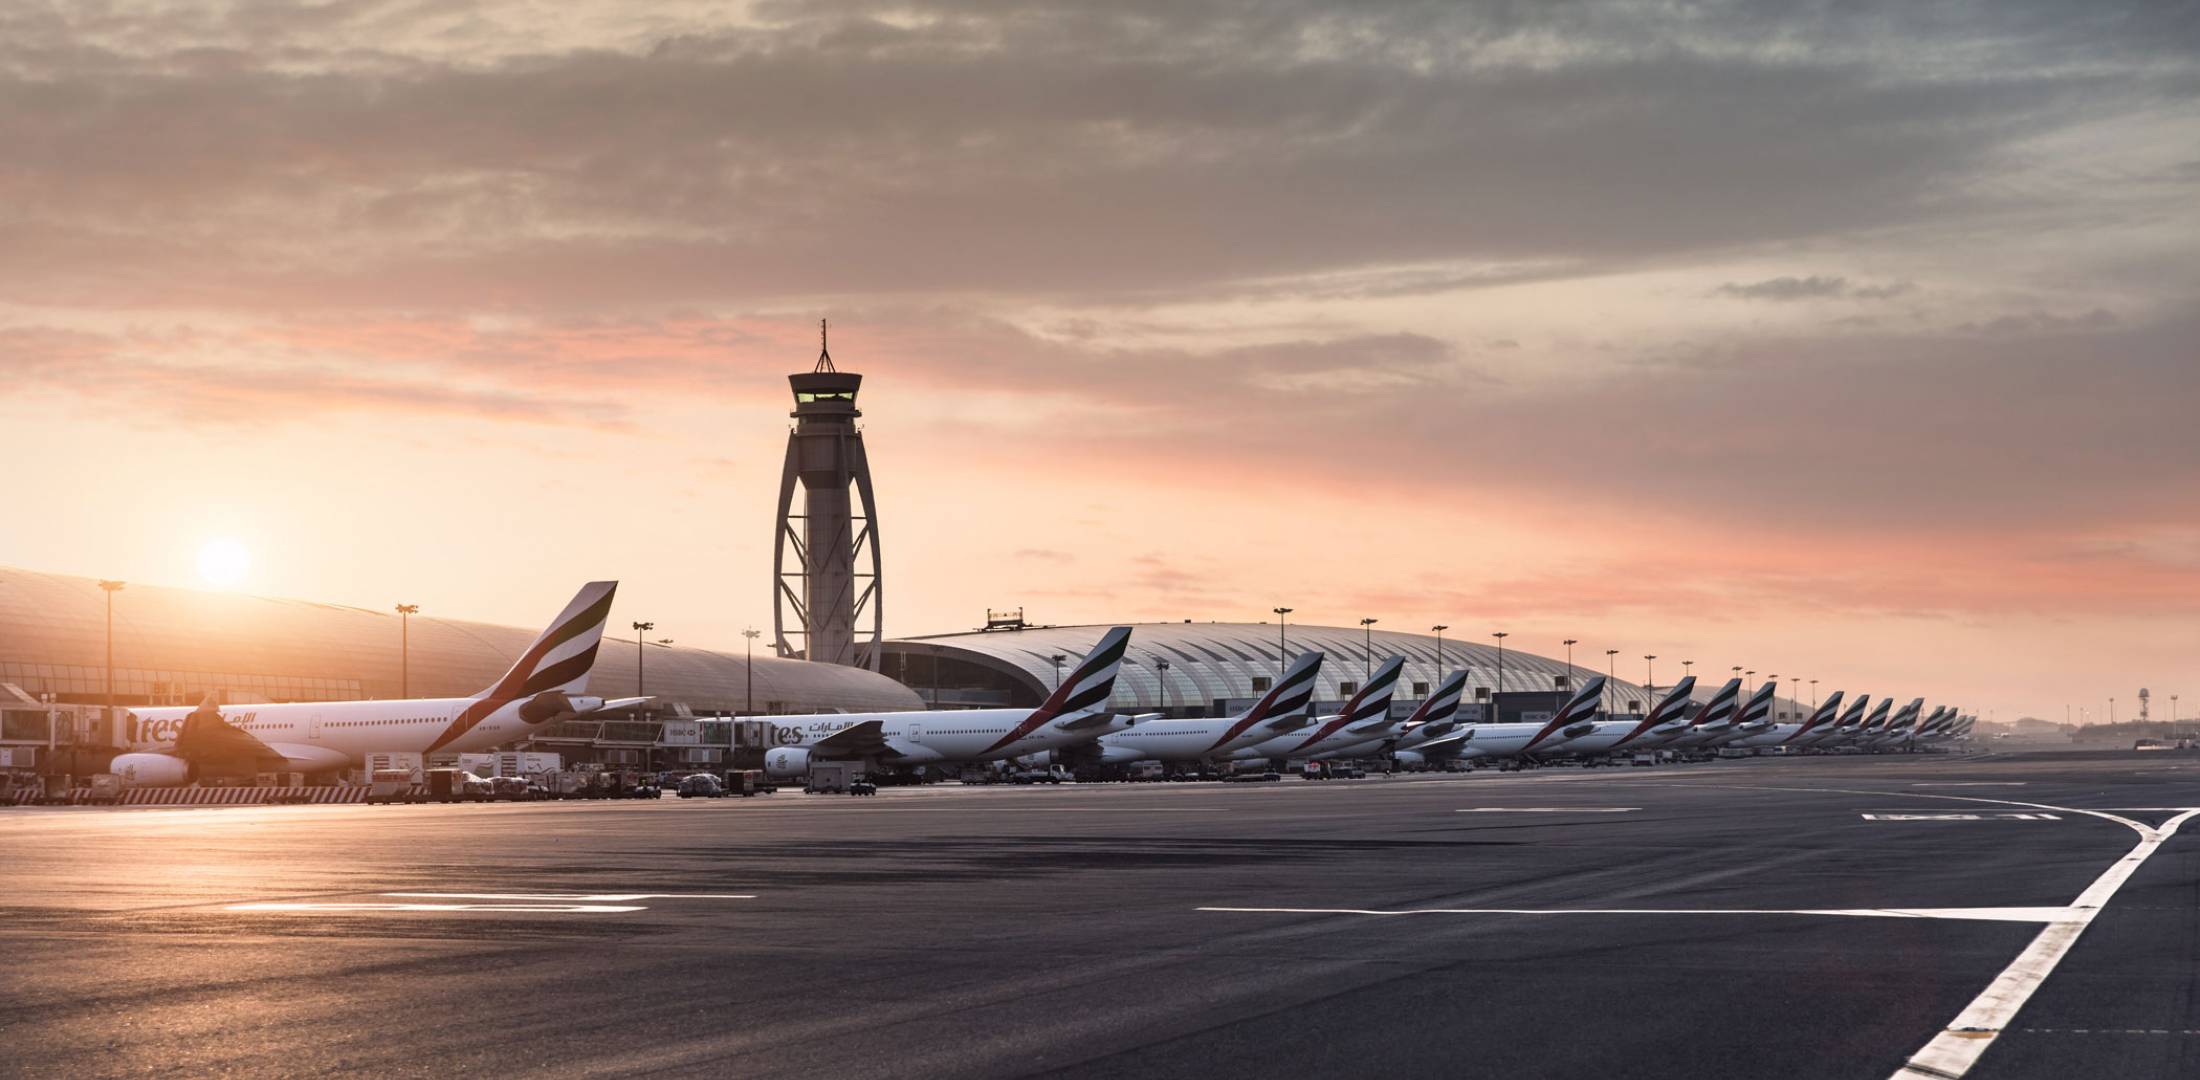 dubai-international-airport-tower-and-terminals-2015-credit-dubai-airports.jpg